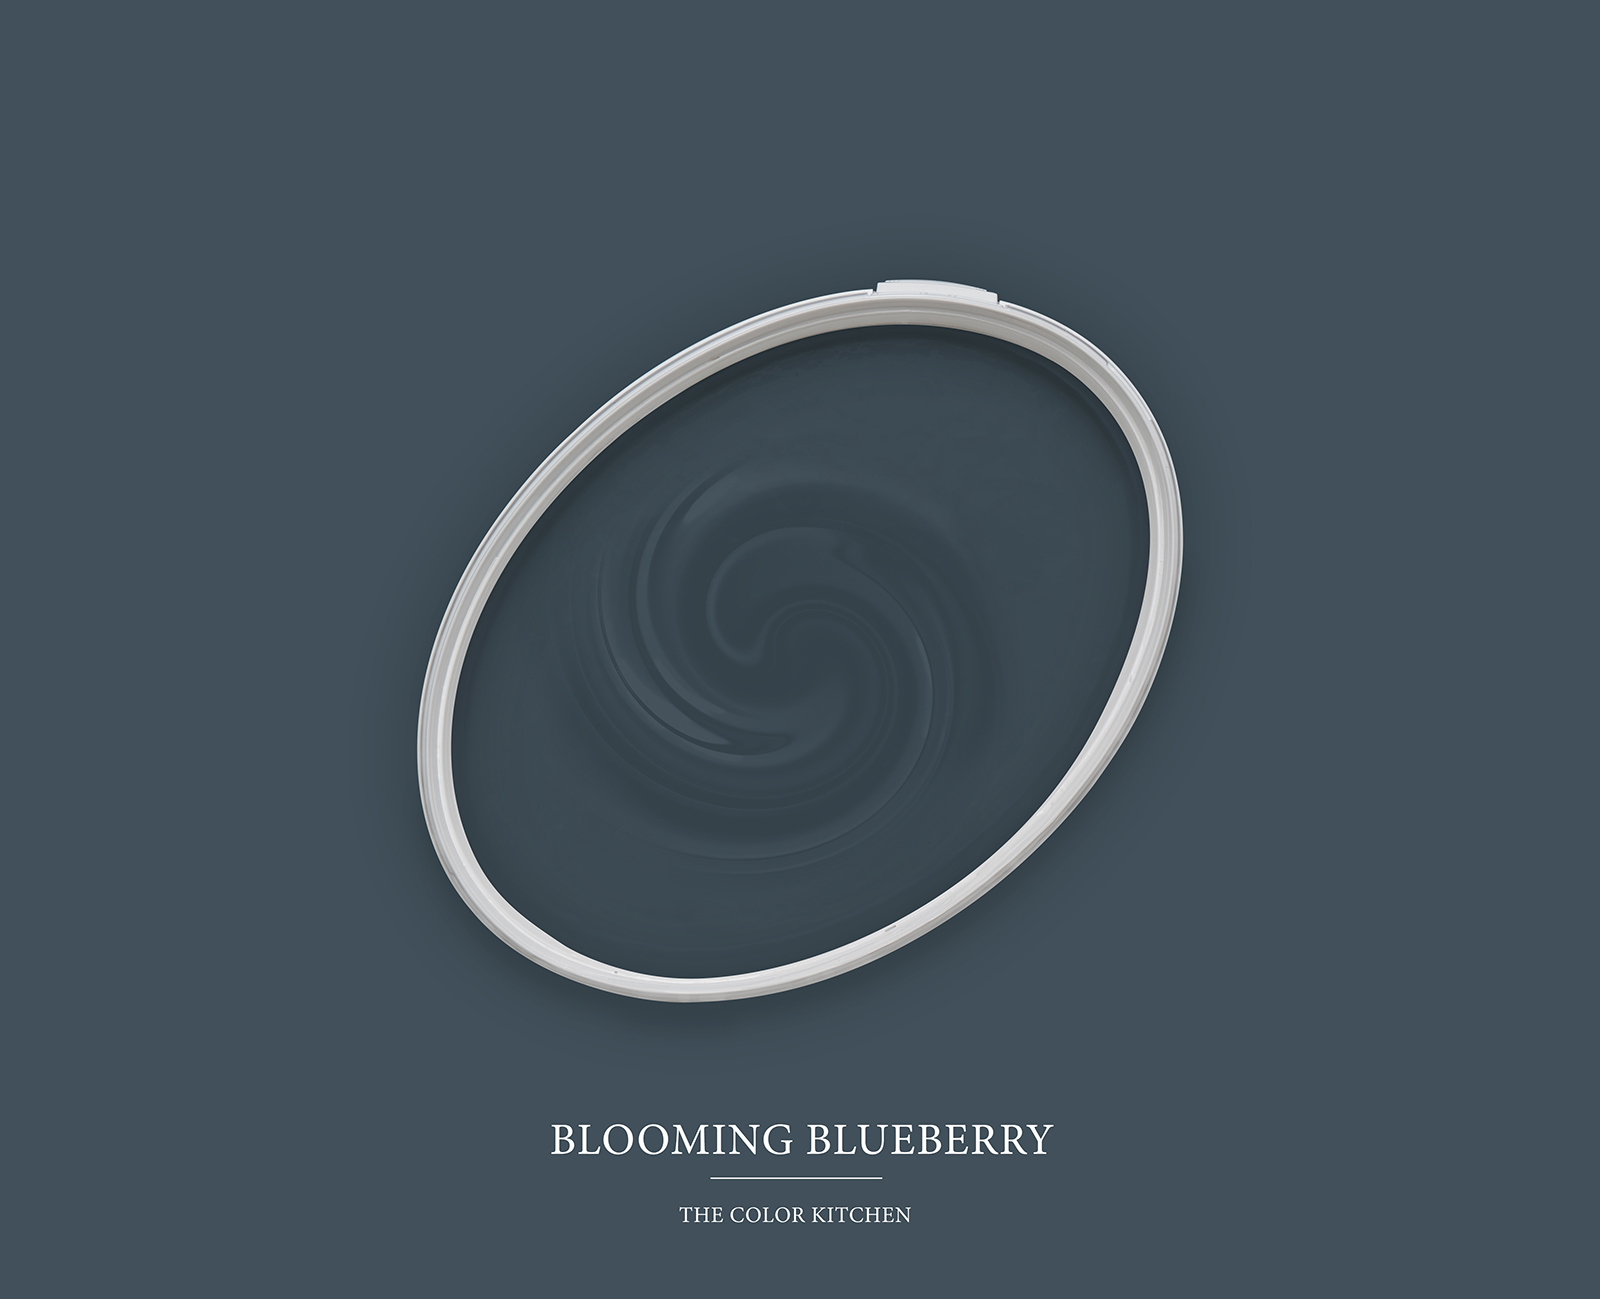         Wandfarbe in prachtvollem Dunkelblau »Blooming Blueberry« TCK3013 – 2,5 Liter
    